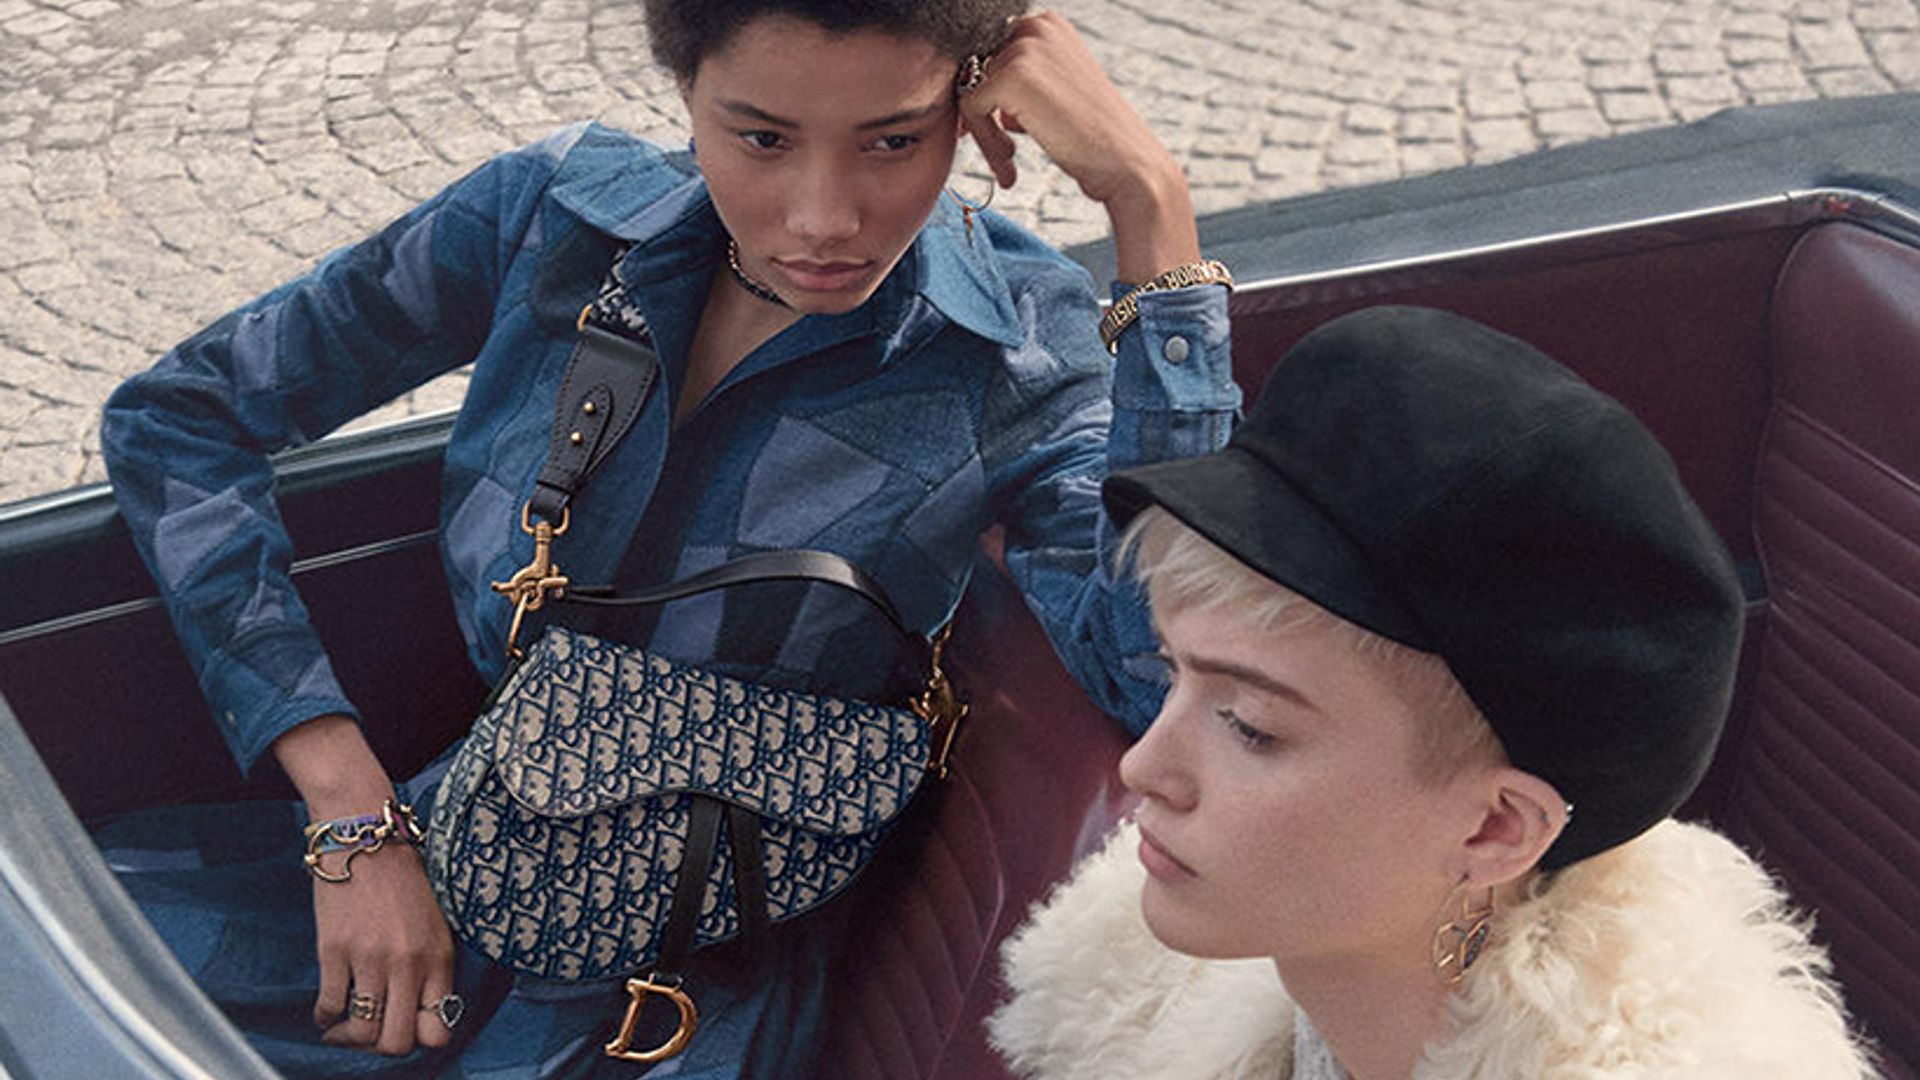 Celeb's Favorite New Handbag: Dior's Revamped Saddle Bag